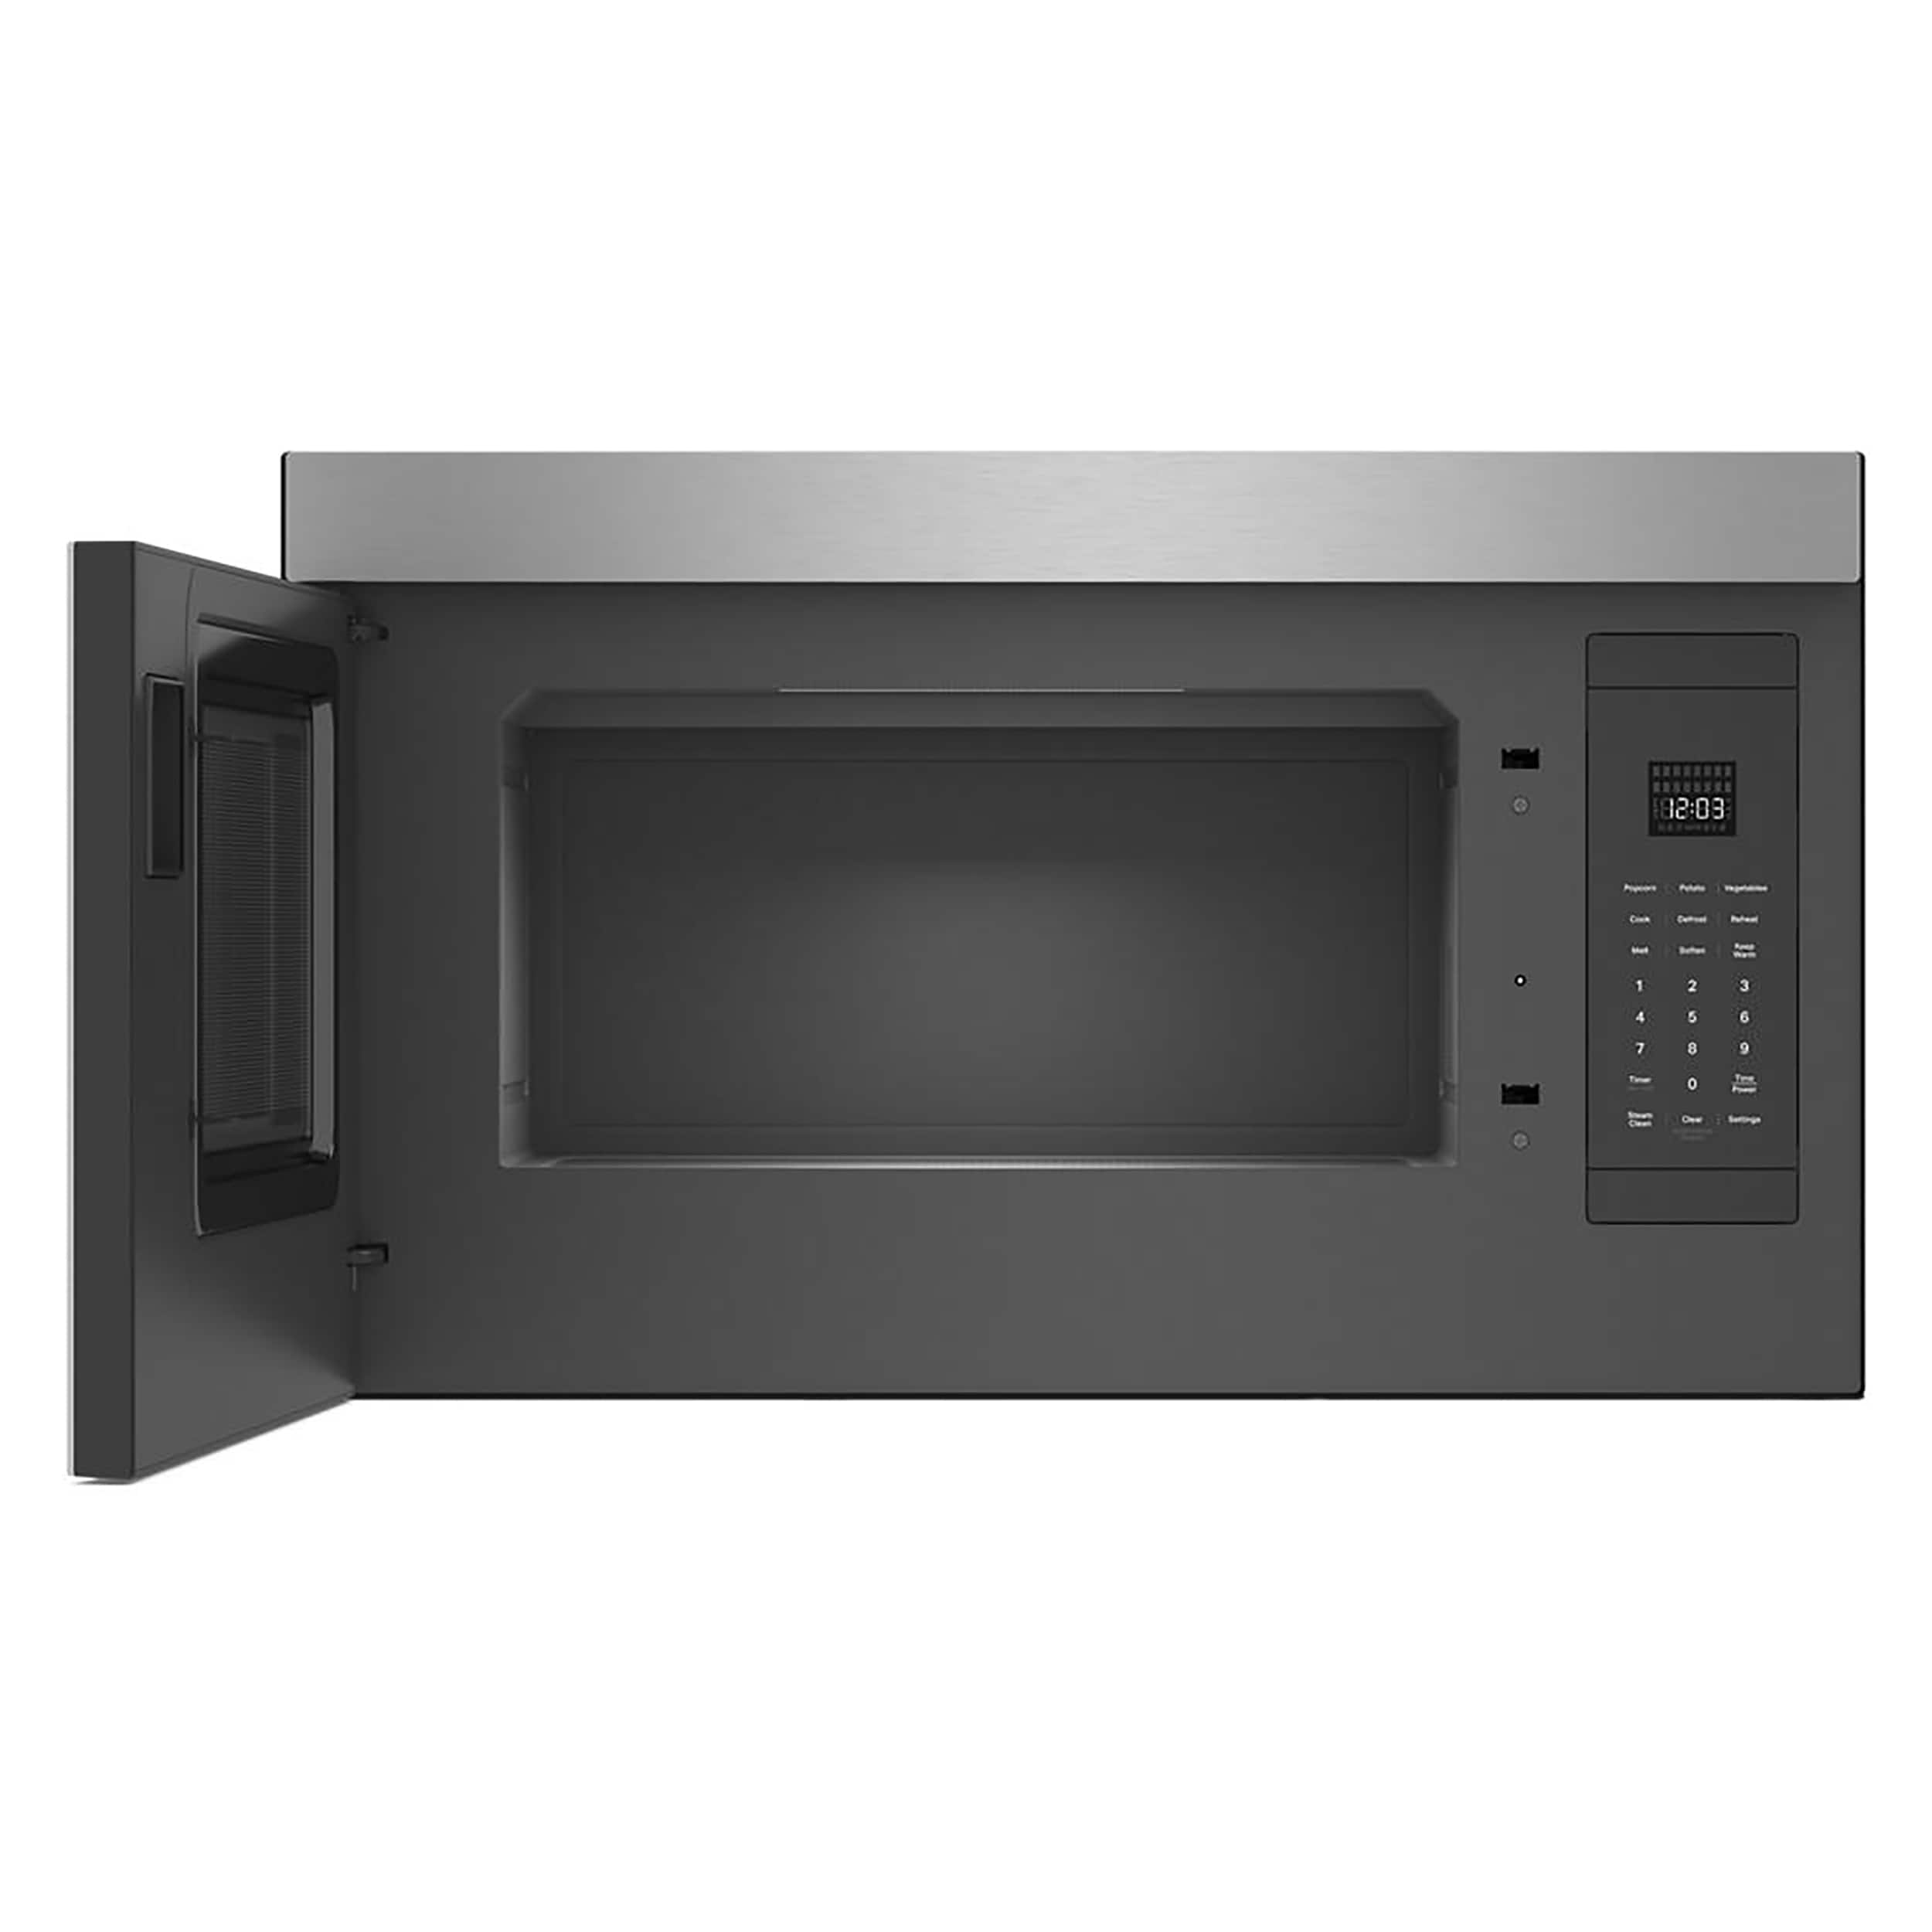 KitchenAid 1000 Watt Built-In Low Profile Microwave with Standard Trim Kit  in Stainless Steel